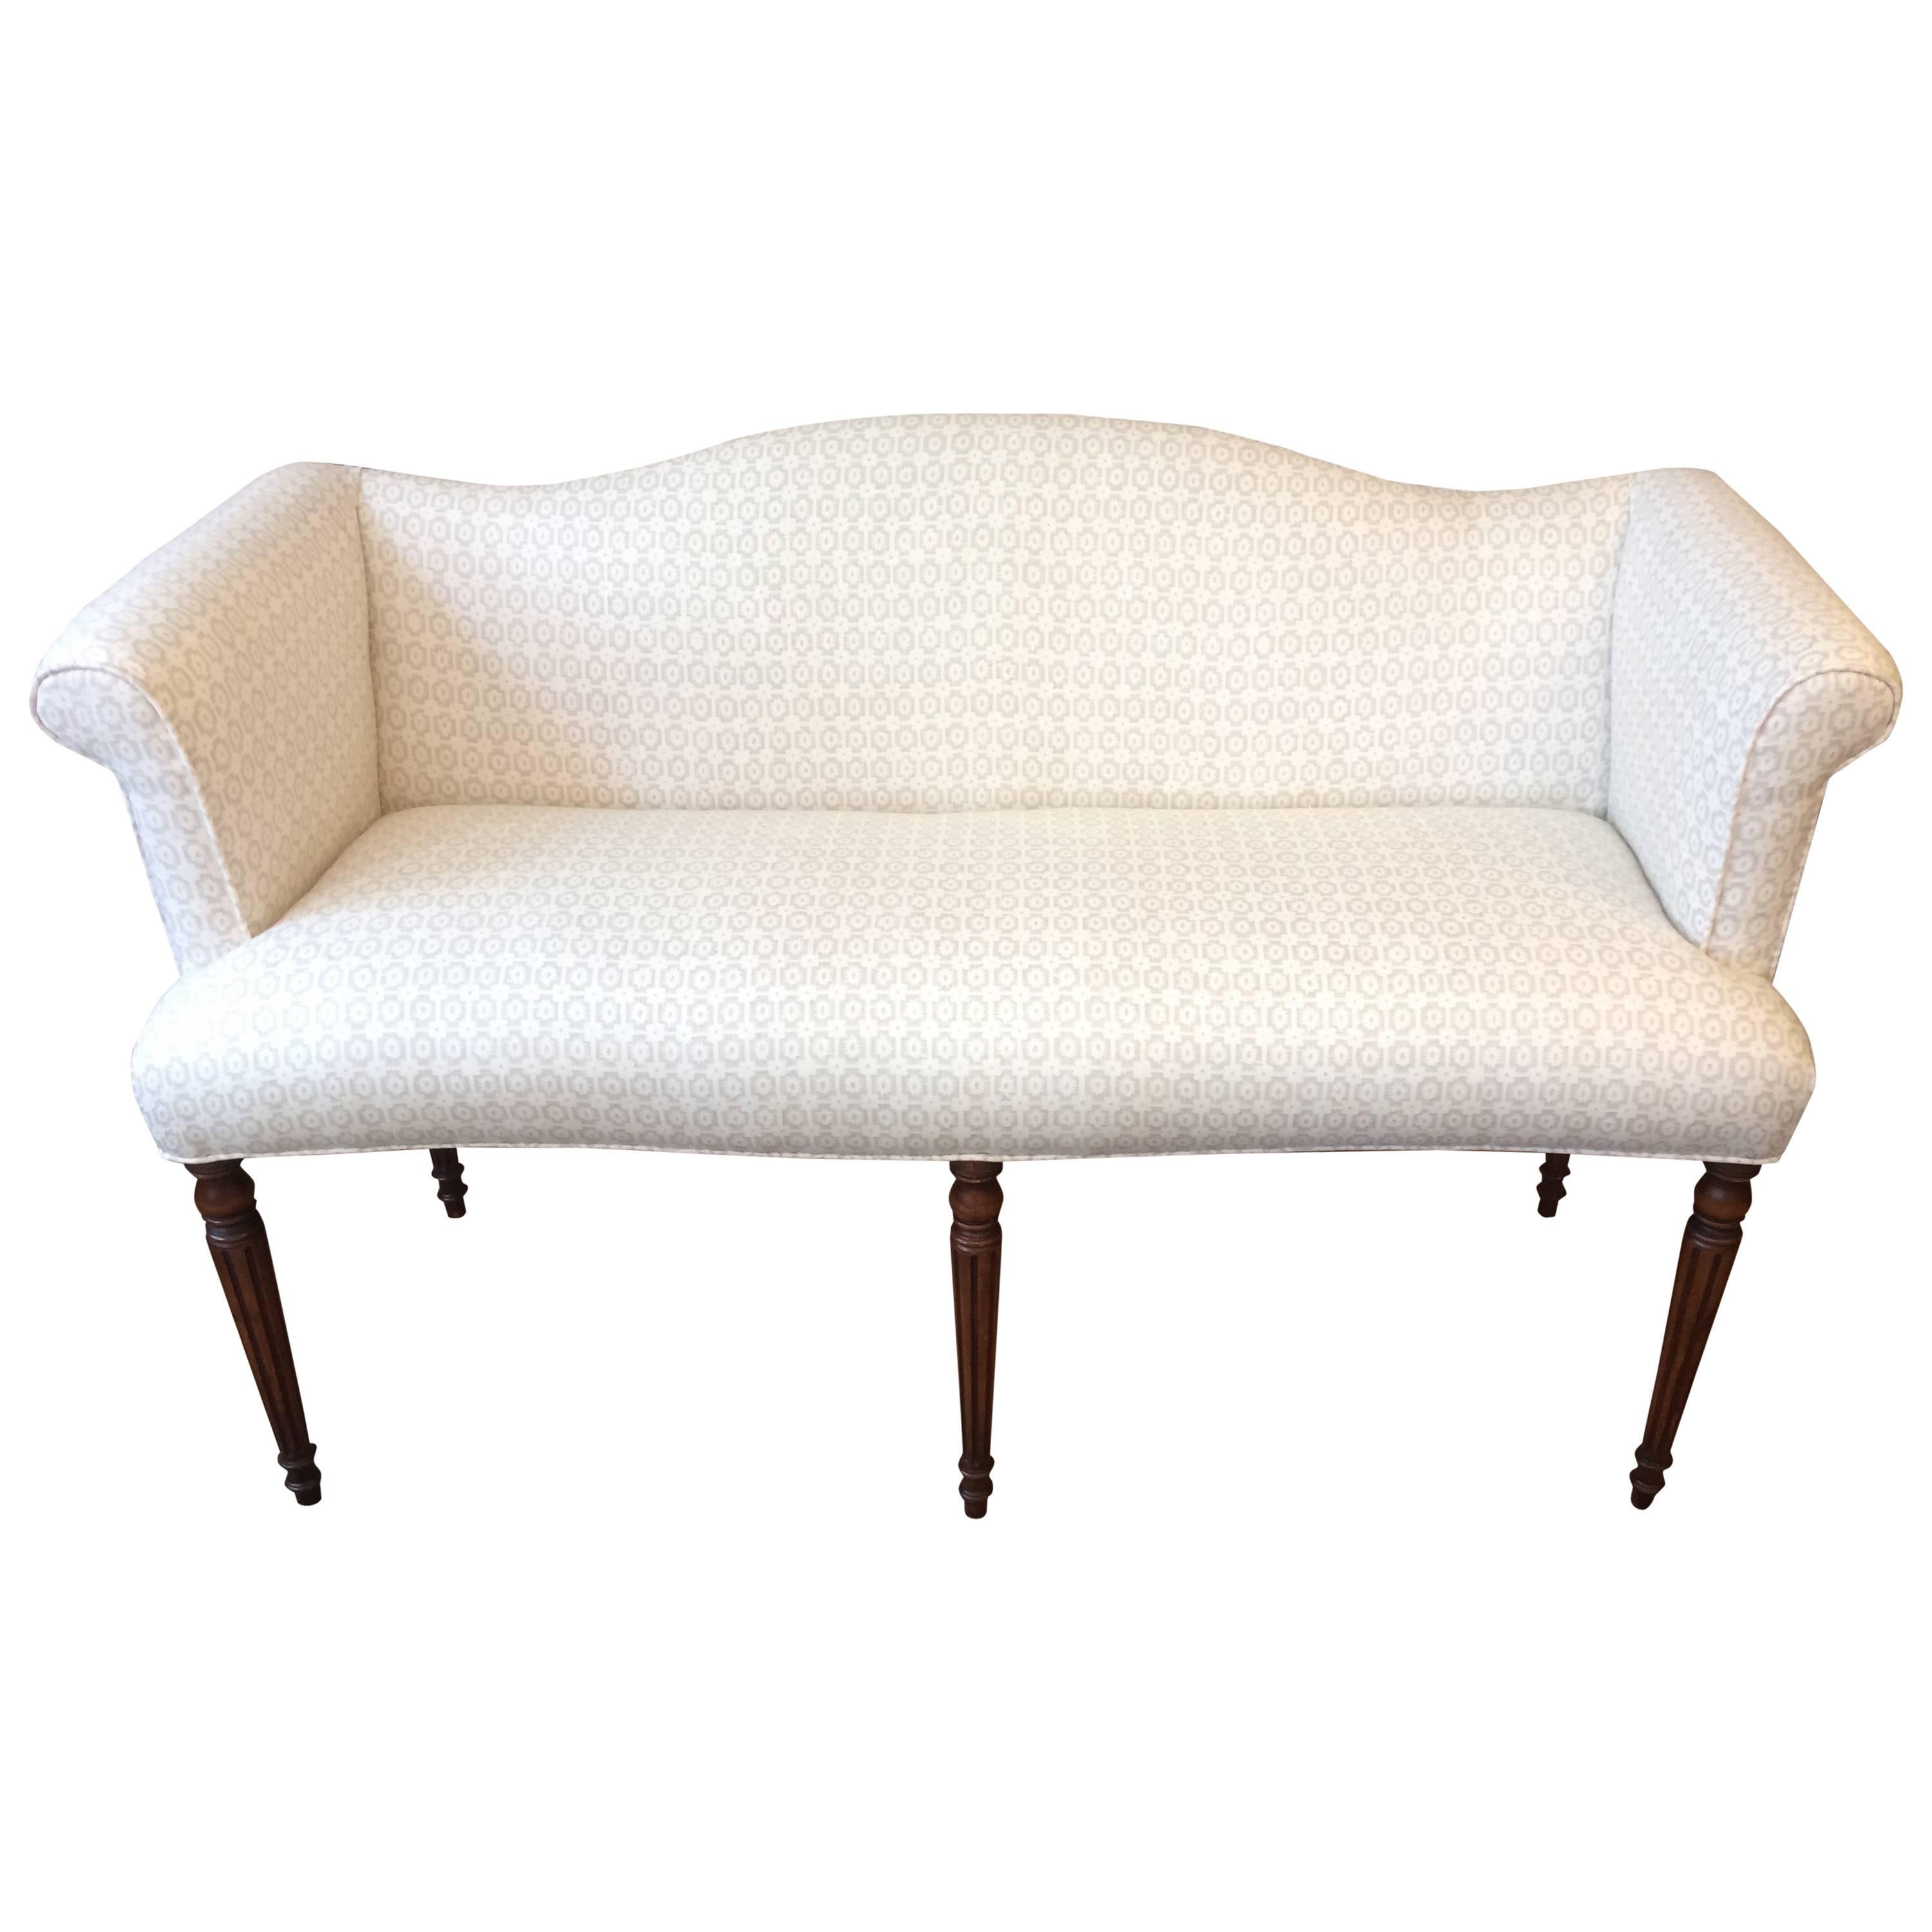 Elegant Vintage Upholstered Settee with Fluted Legs